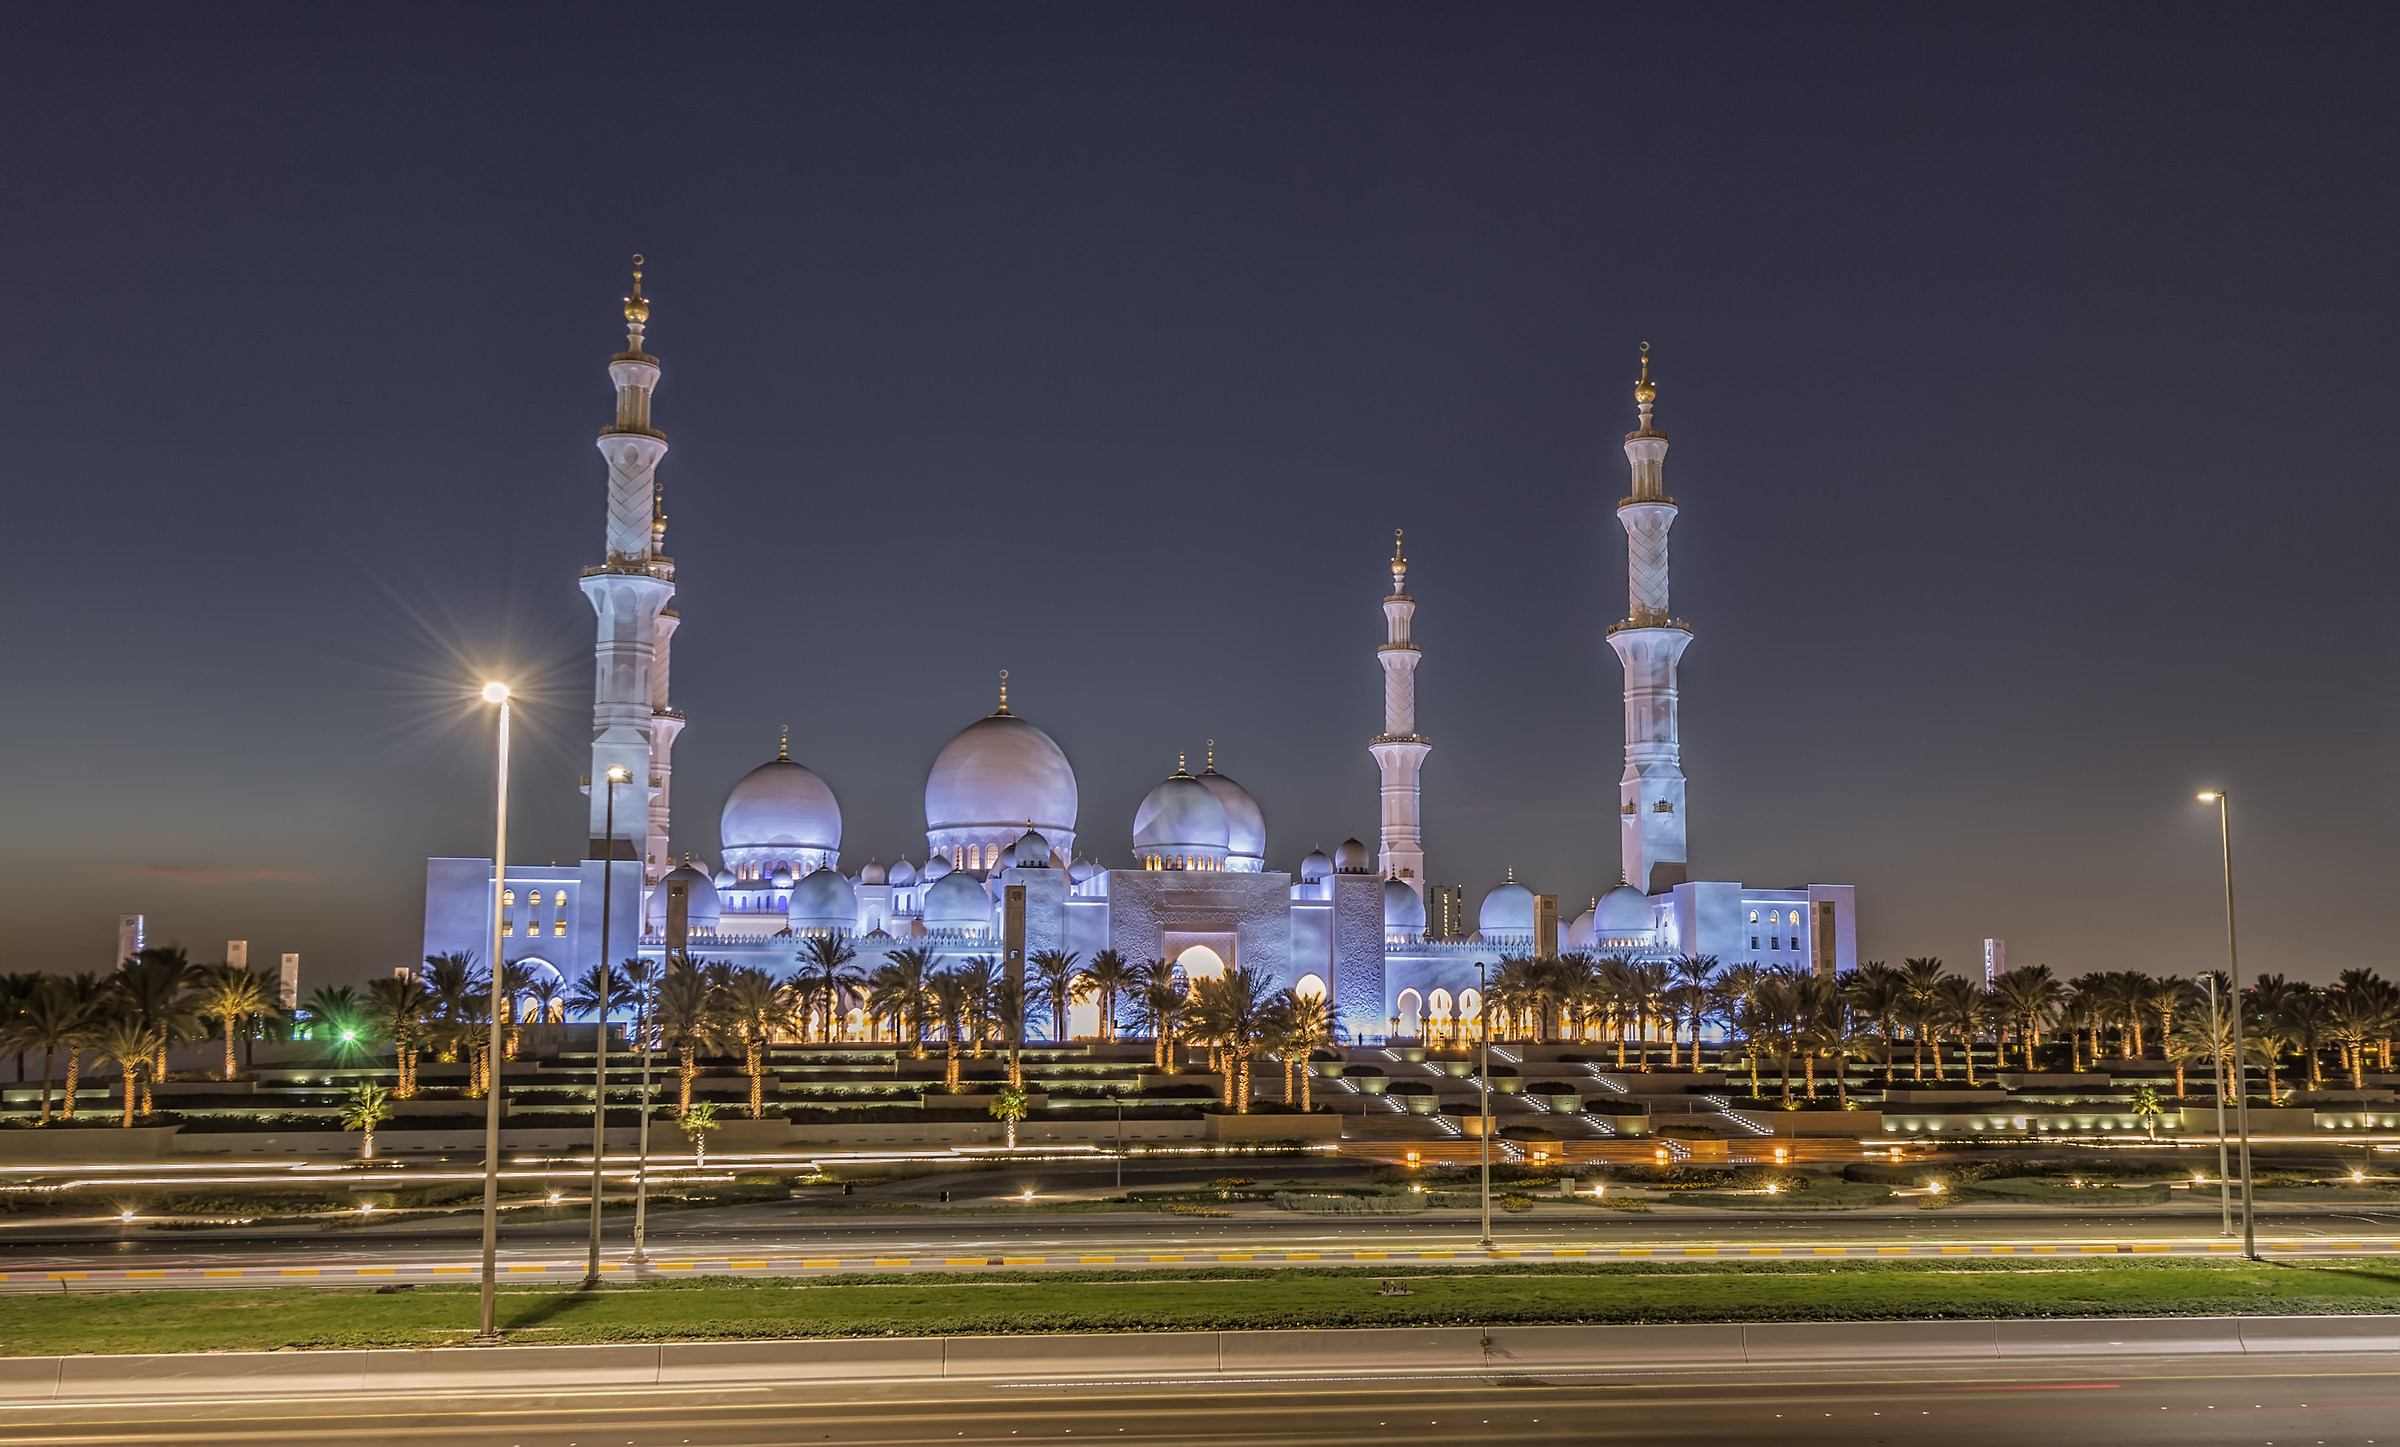 Sheikh Zayed Grand Mosque - Abu Dhabi...